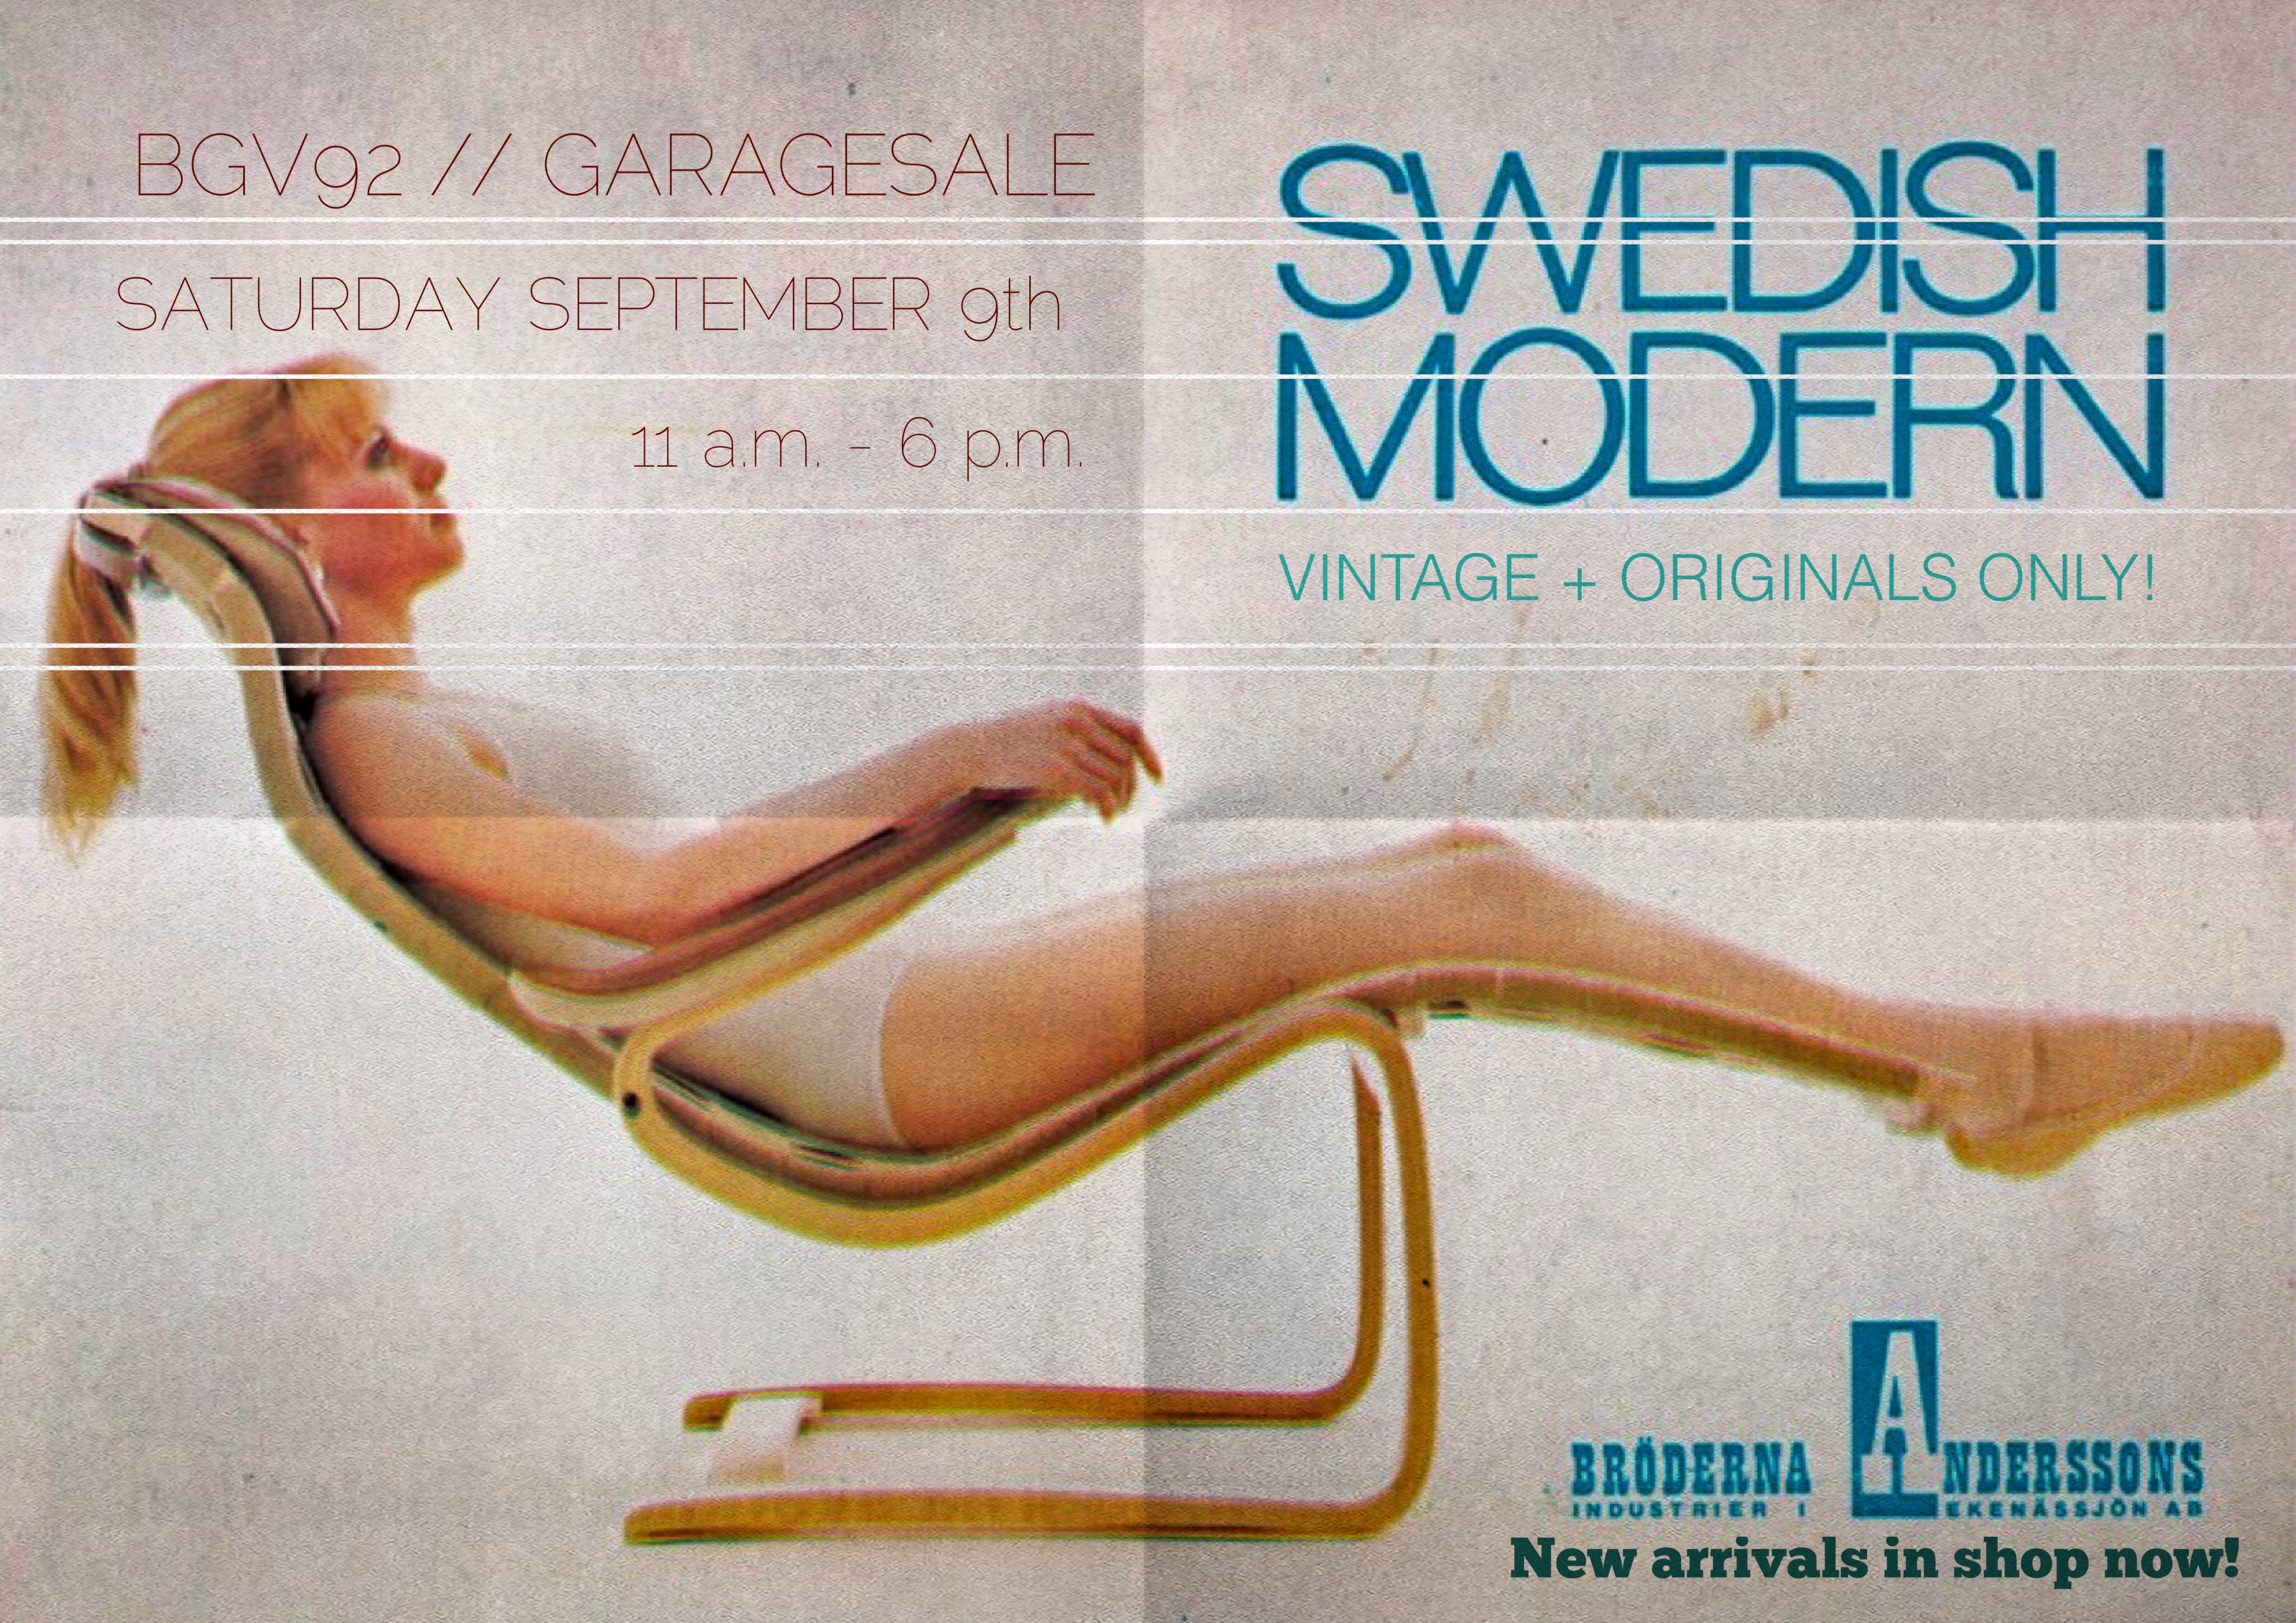 Zaterdag 8 september, vintage+originals only! @ garagesale Begijnenvest